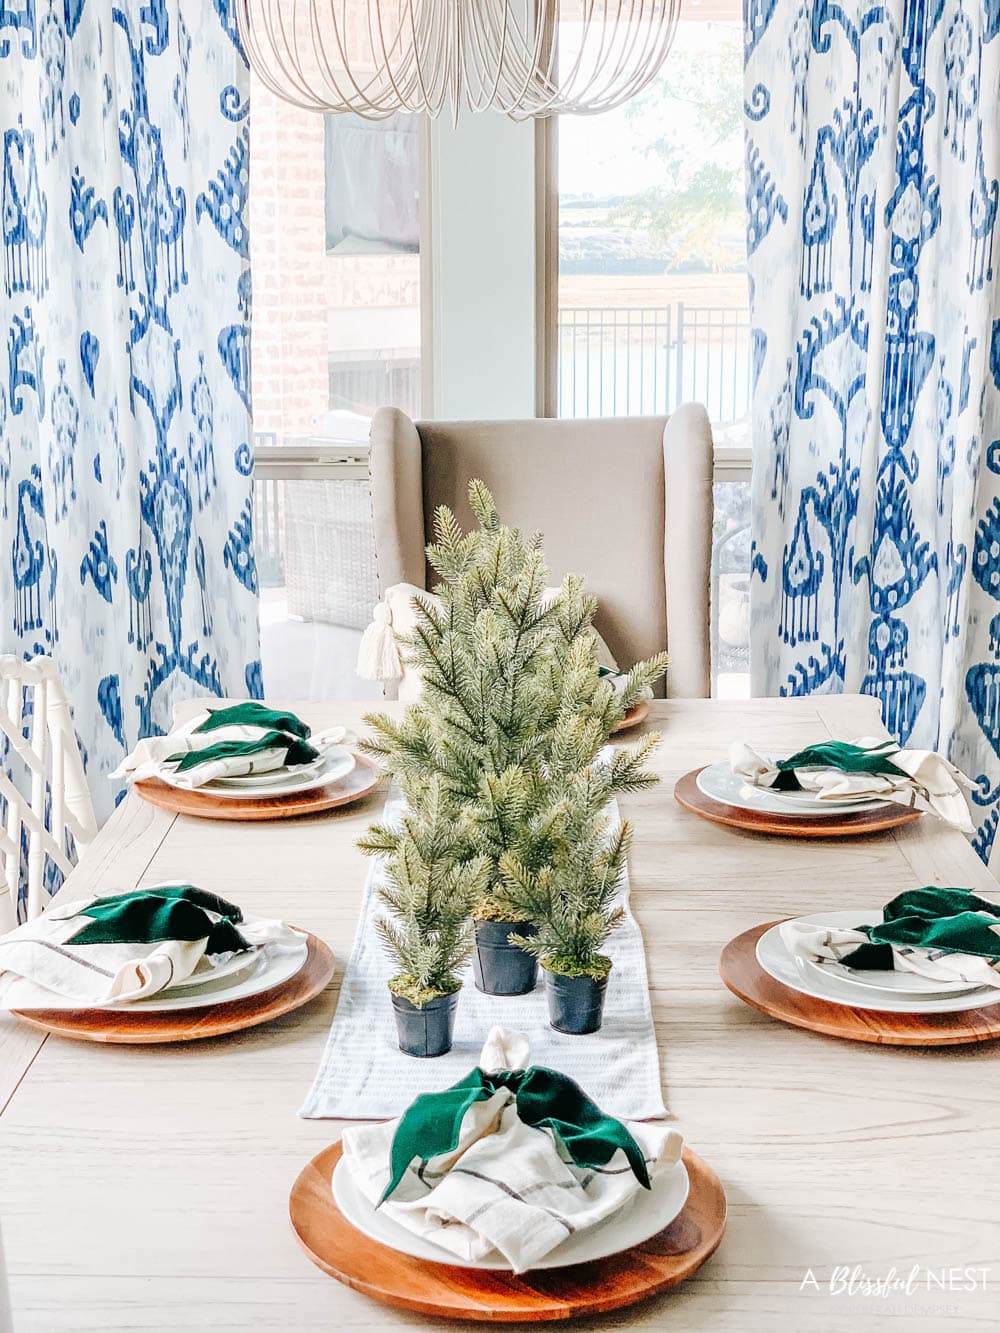 Blue and white dining room with Christmas decor. #ABlissfulNest #christmasdecor #diningroom